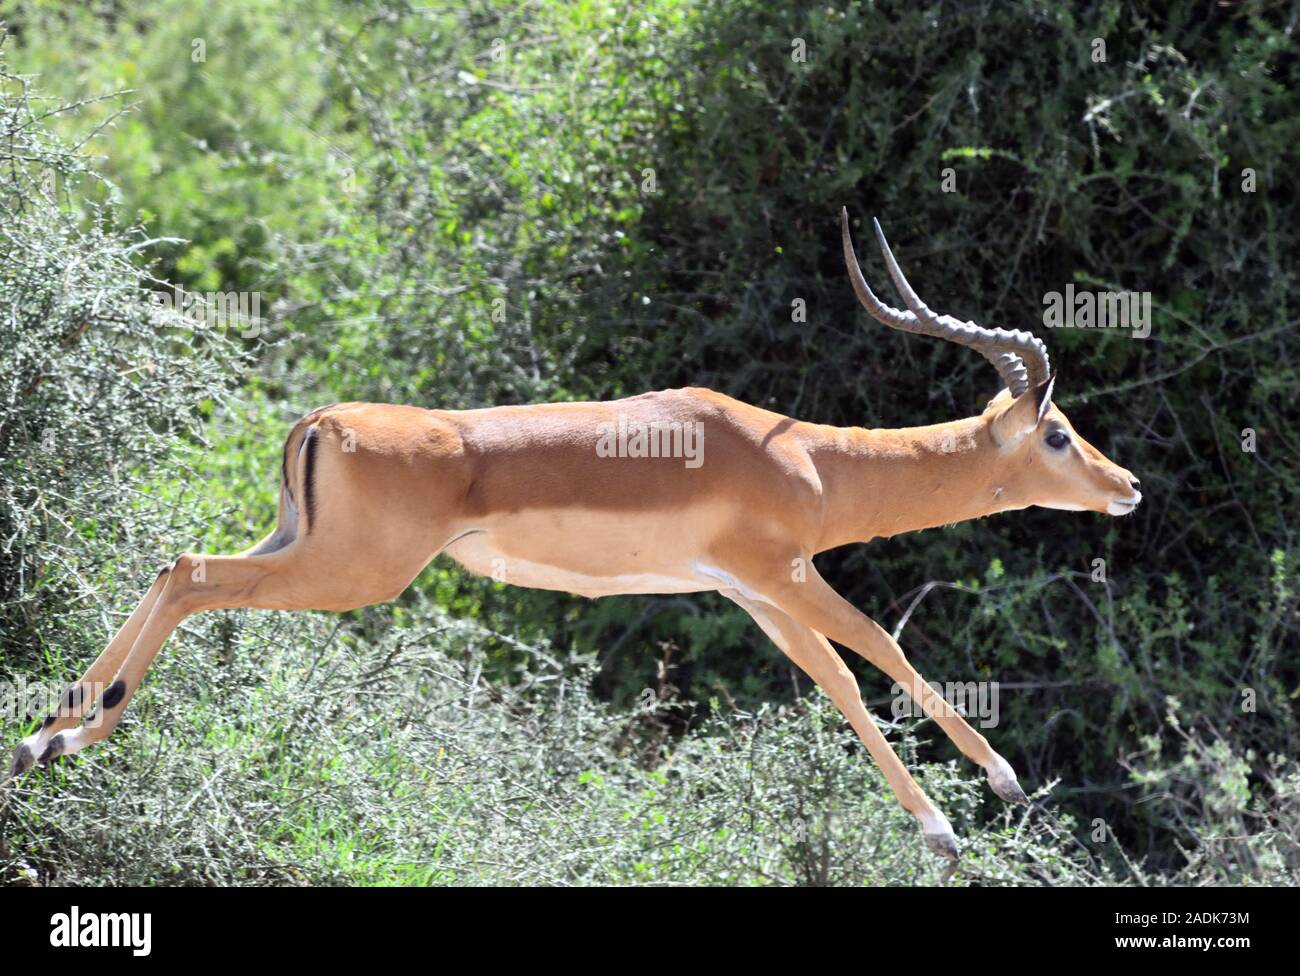 An impala runs through dry scrub. Sinya Wildlife Management Area, Tanzania. Stock Photo